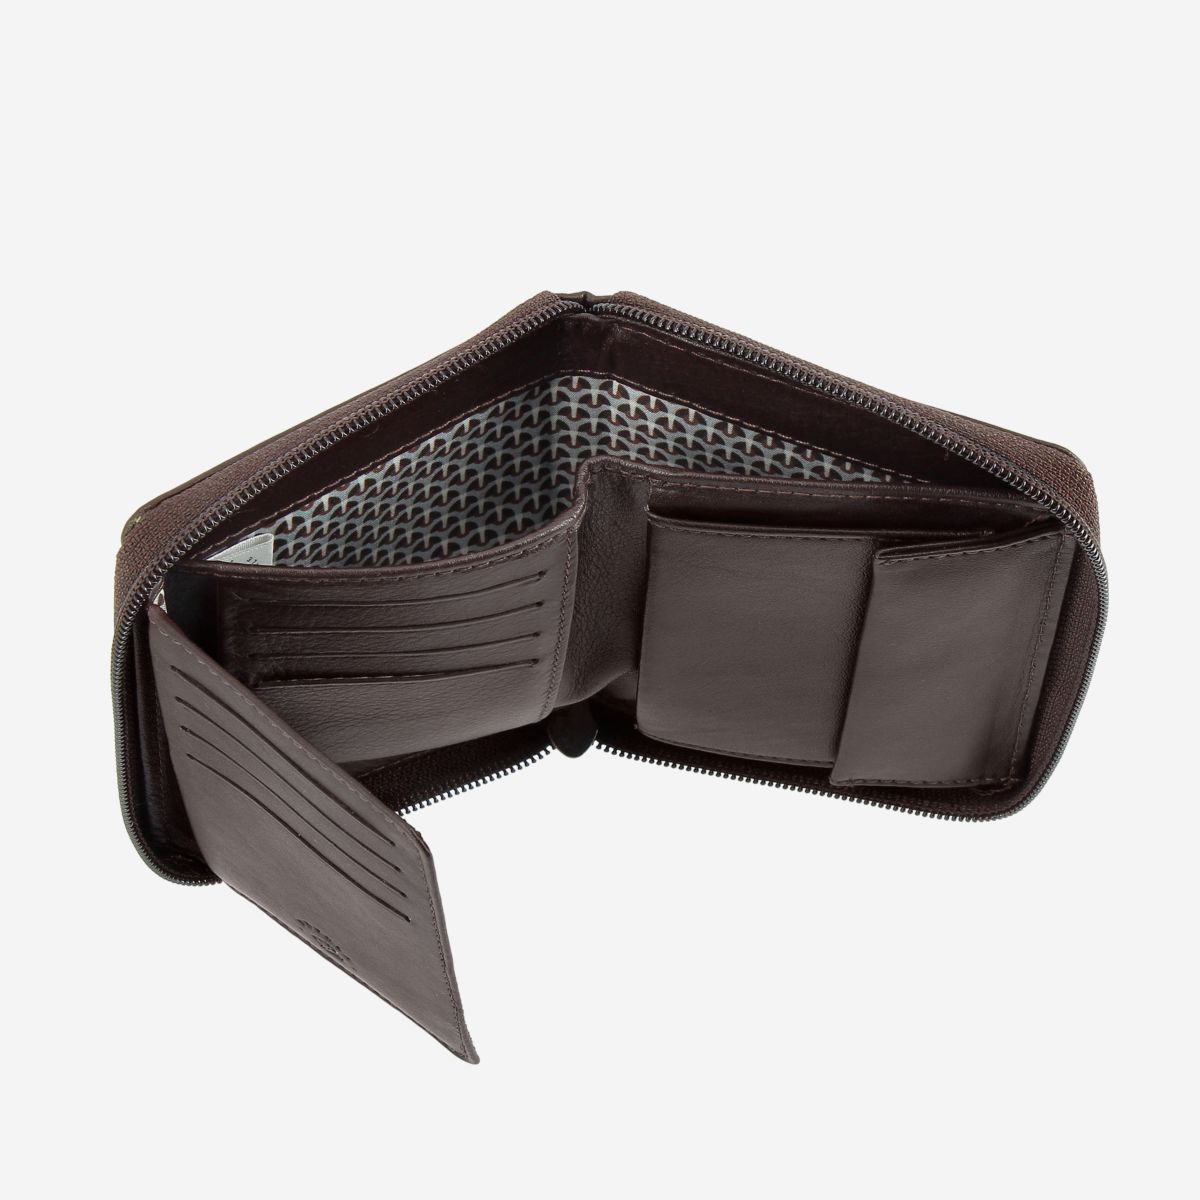 NUVOLA PELLE Mens Leather Wallet with Zip - Dark Brown